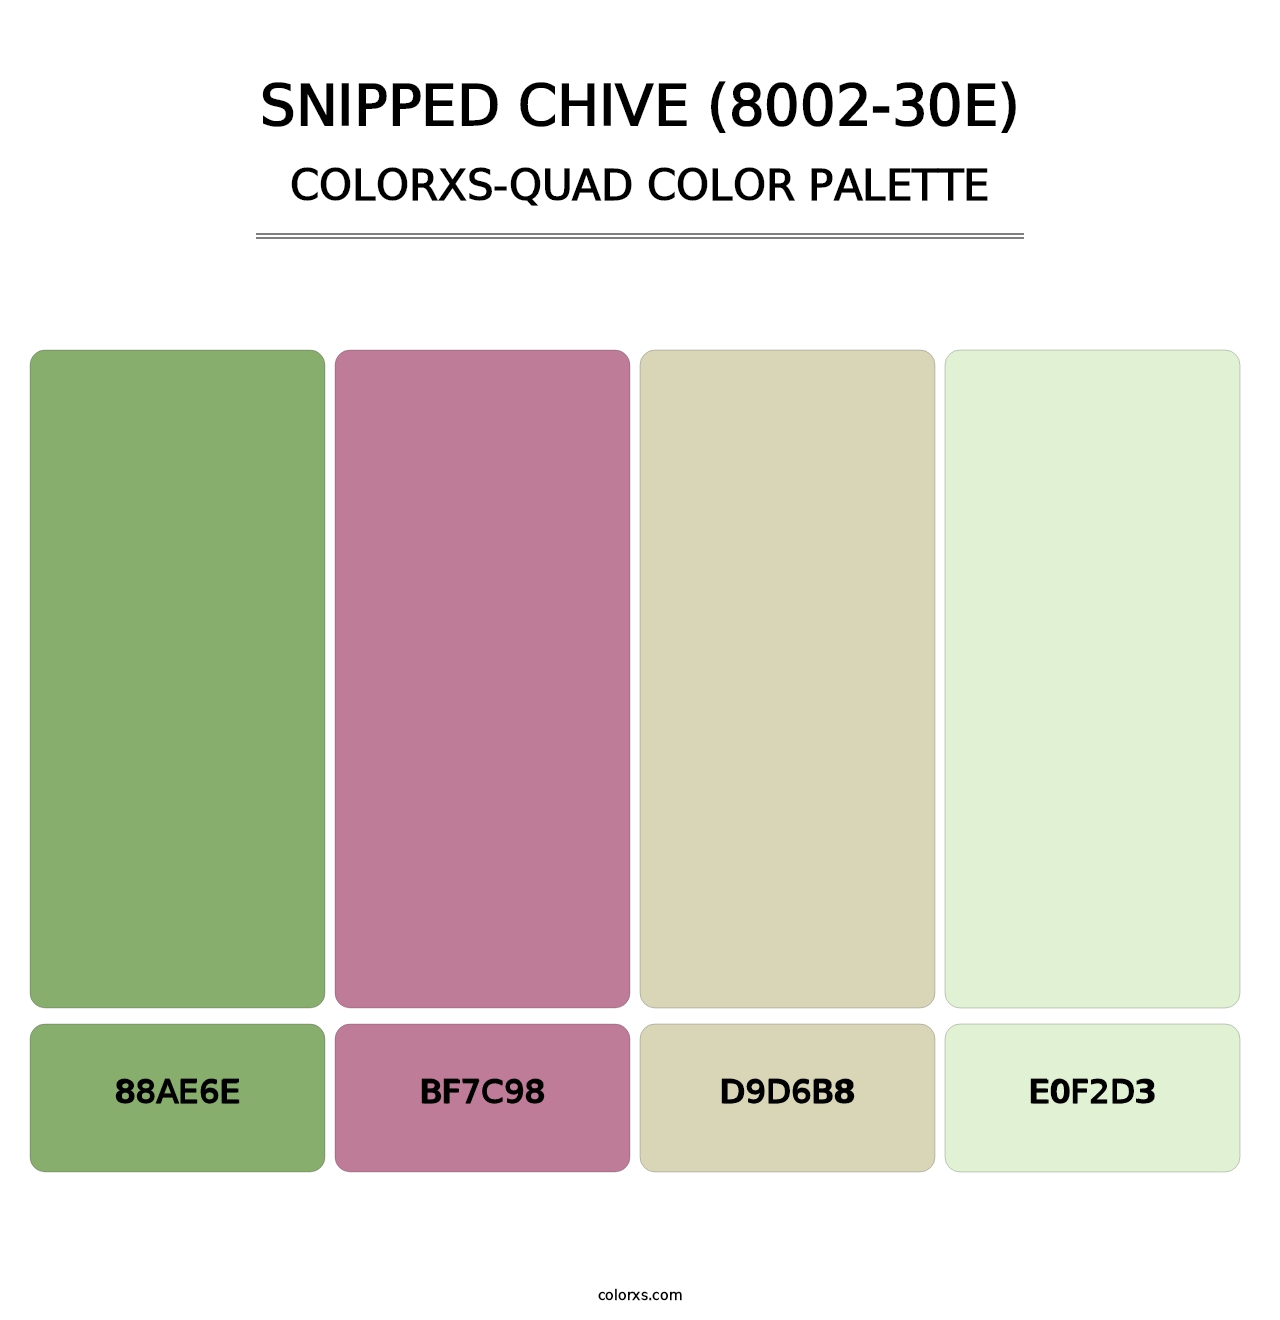 Snipped Chive (8002-30E) - Colorxs Quad Palette